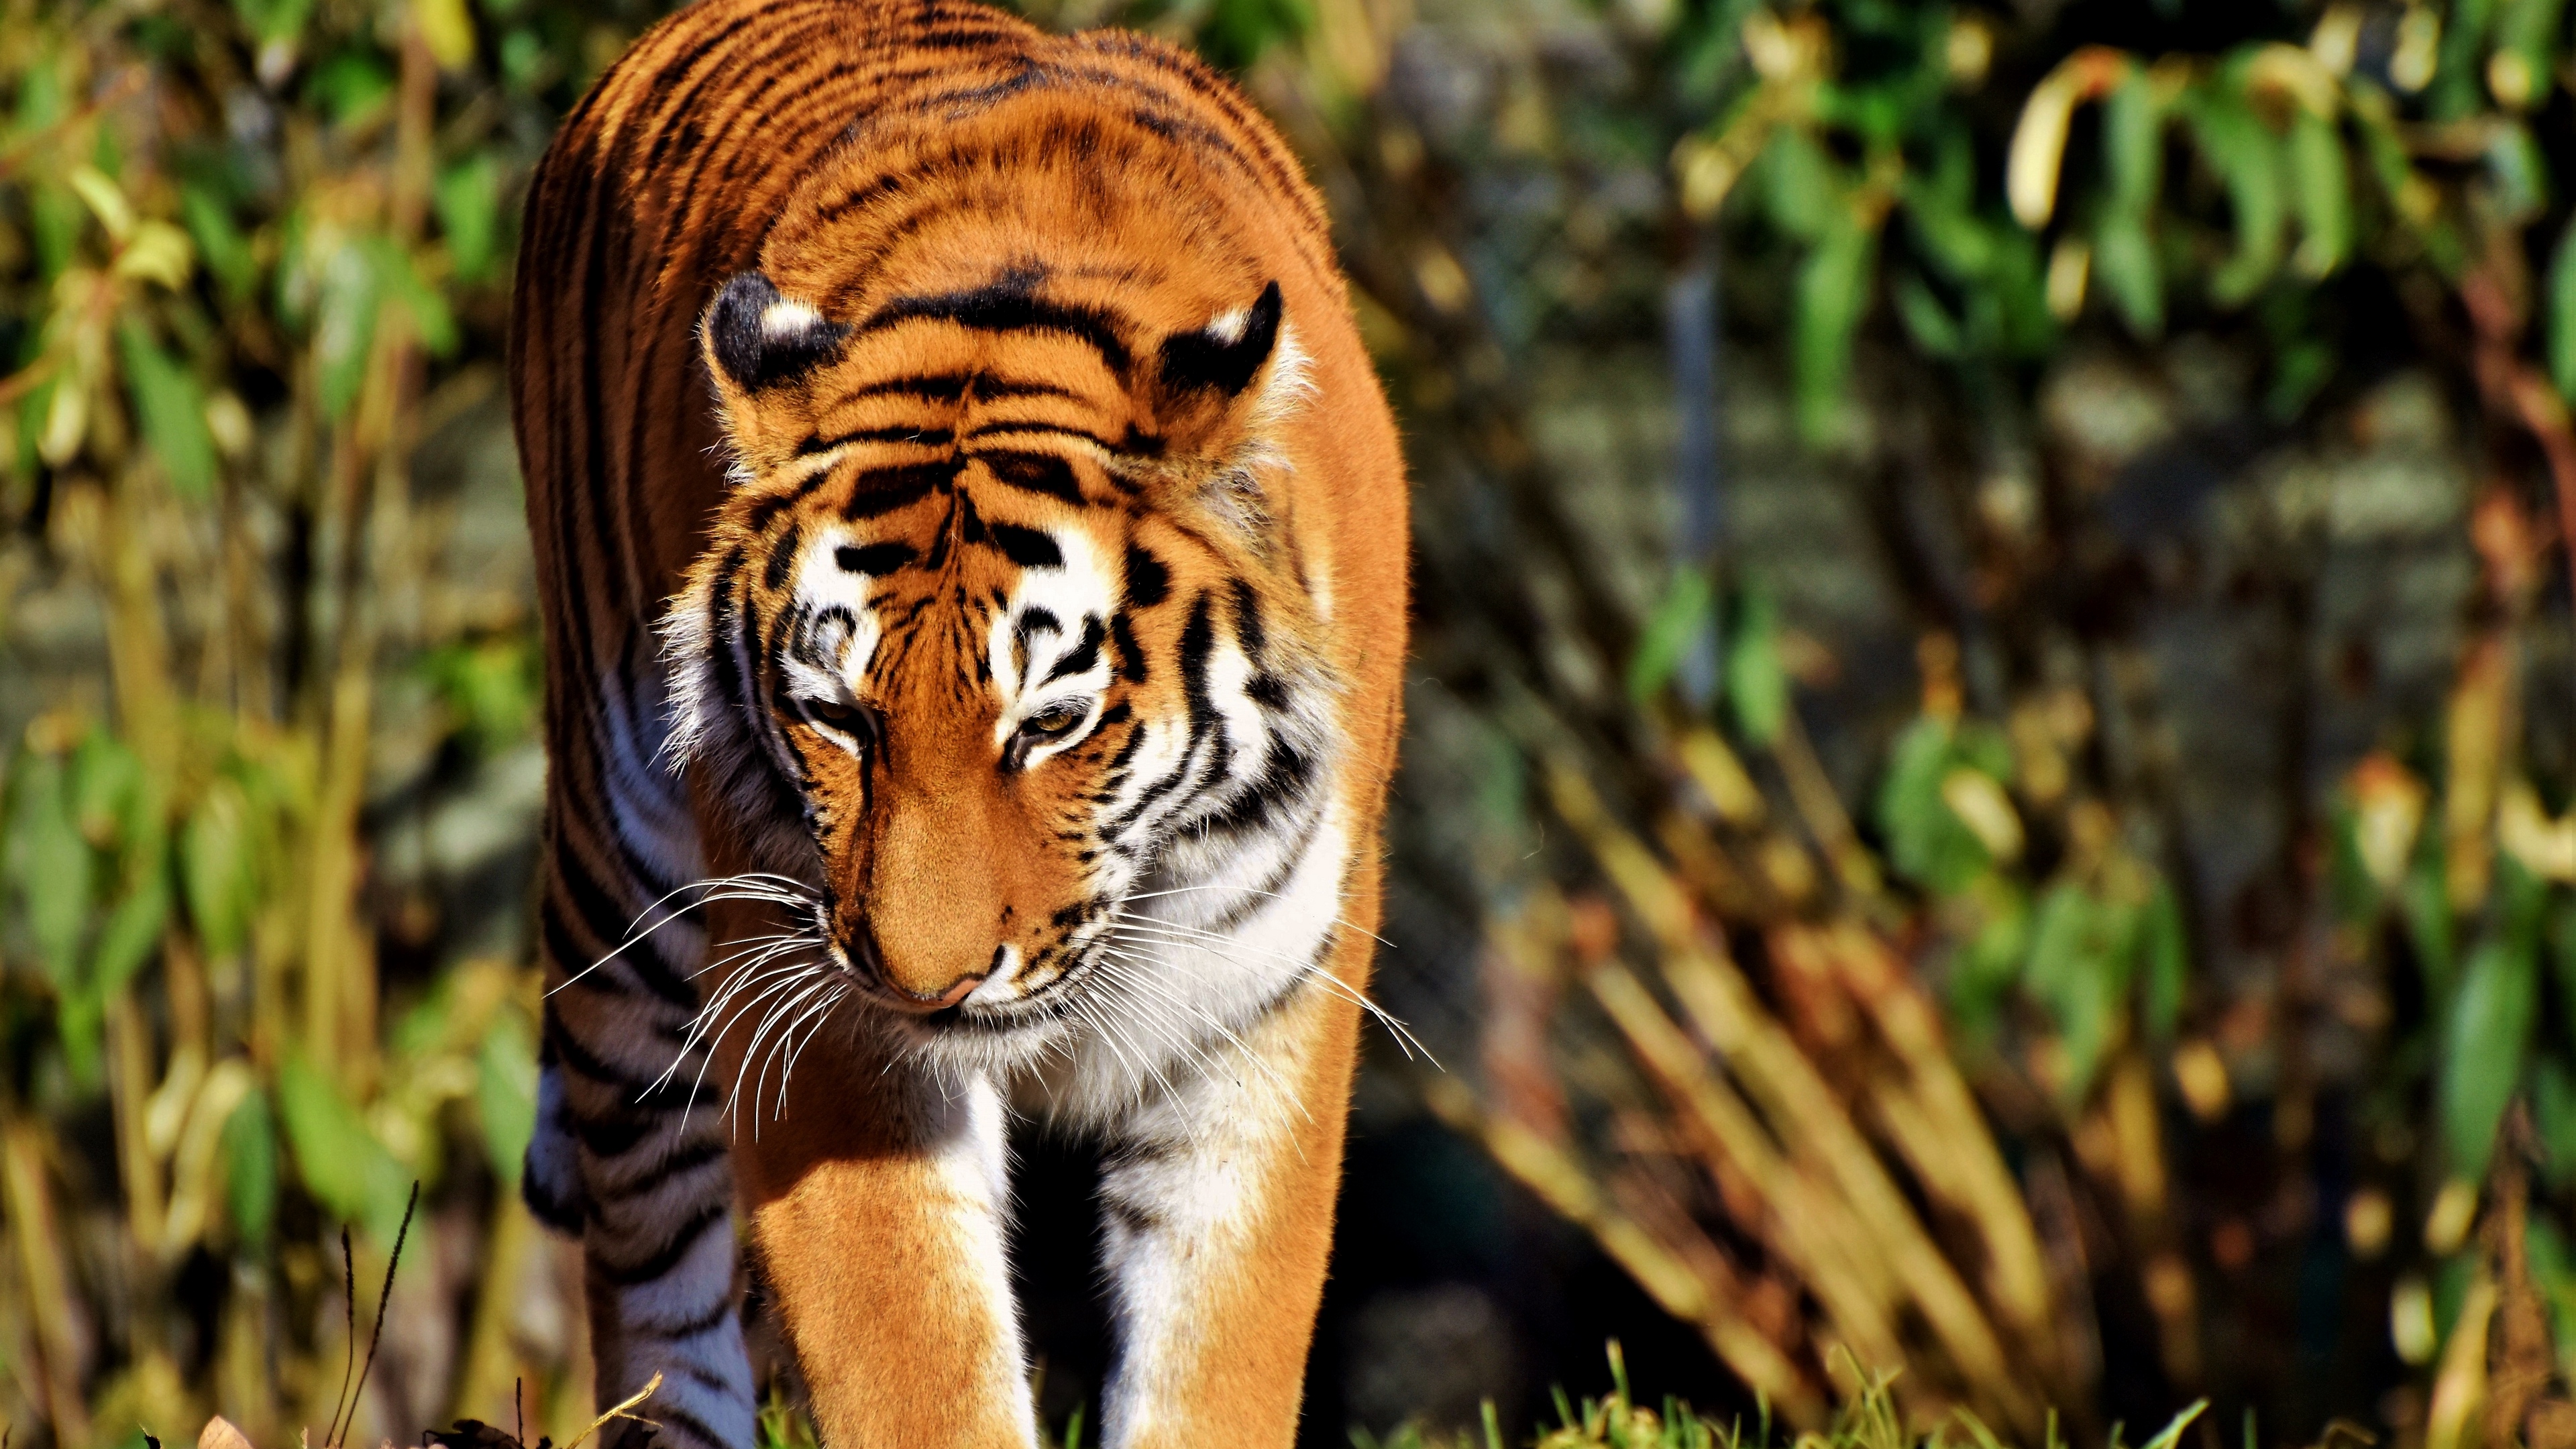 tiger predator big cat walk 4k 1542242296 - tiger, predator, big cat, walk 4k - Tiger, Predator, big cat